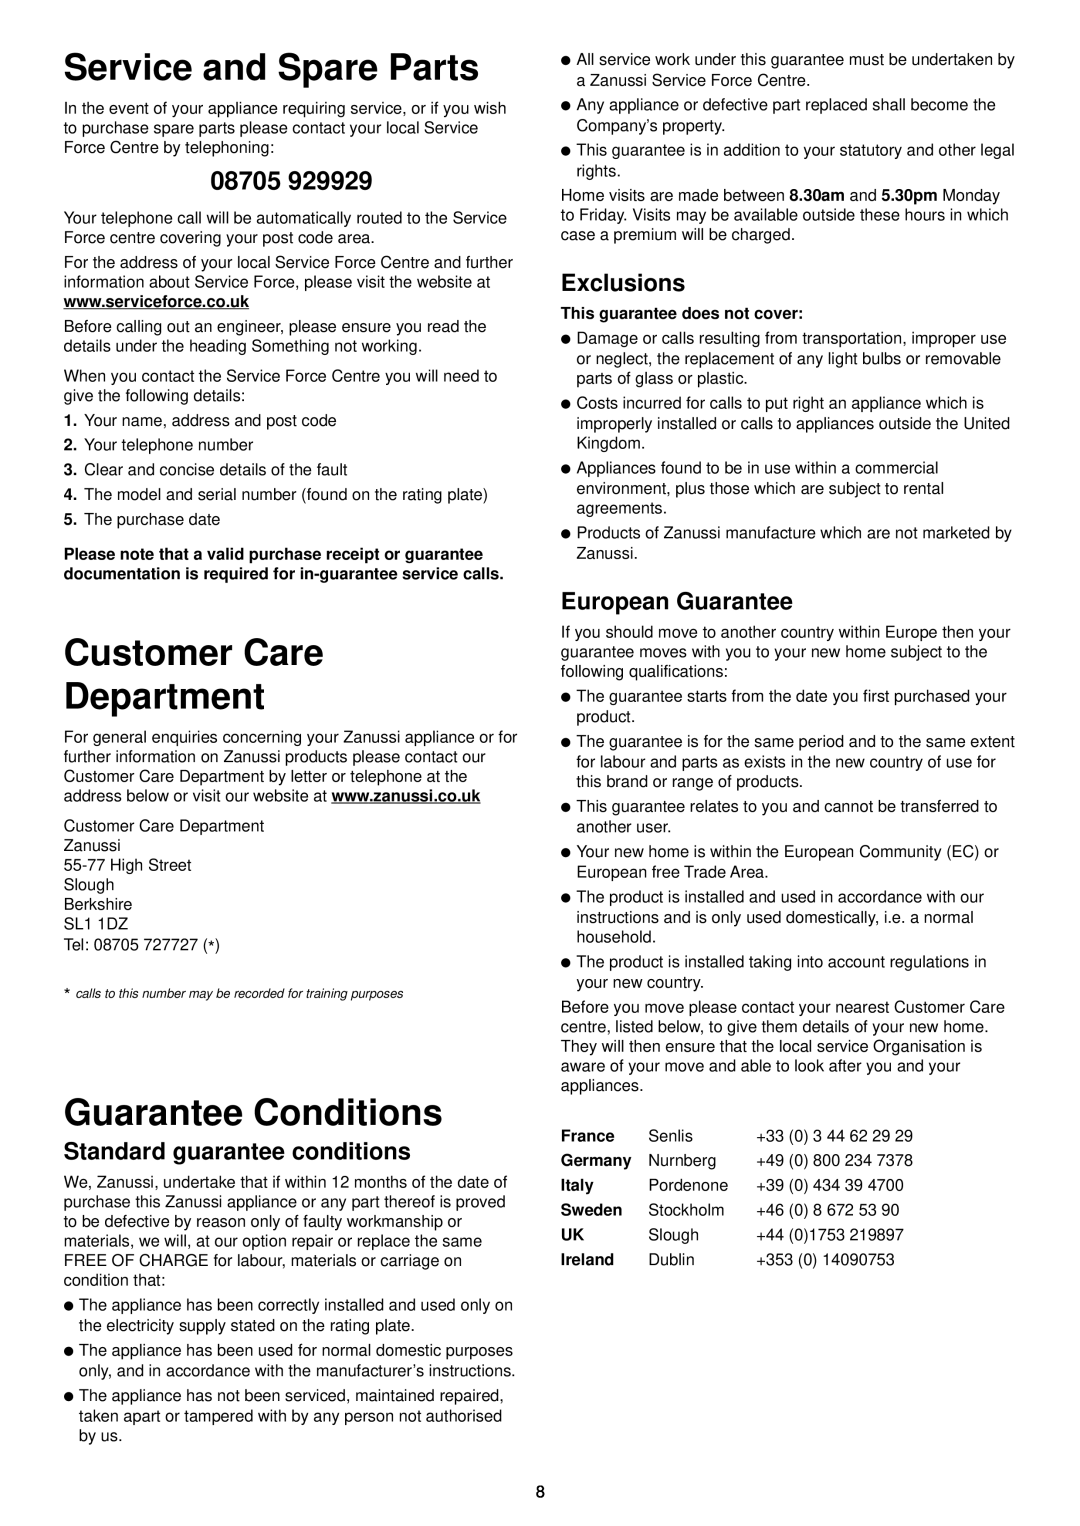 Zanussi DA 6141 D Service and Spare Parts, Customer Care Department, Guarantee Conditions, Standard guarantee conditions 